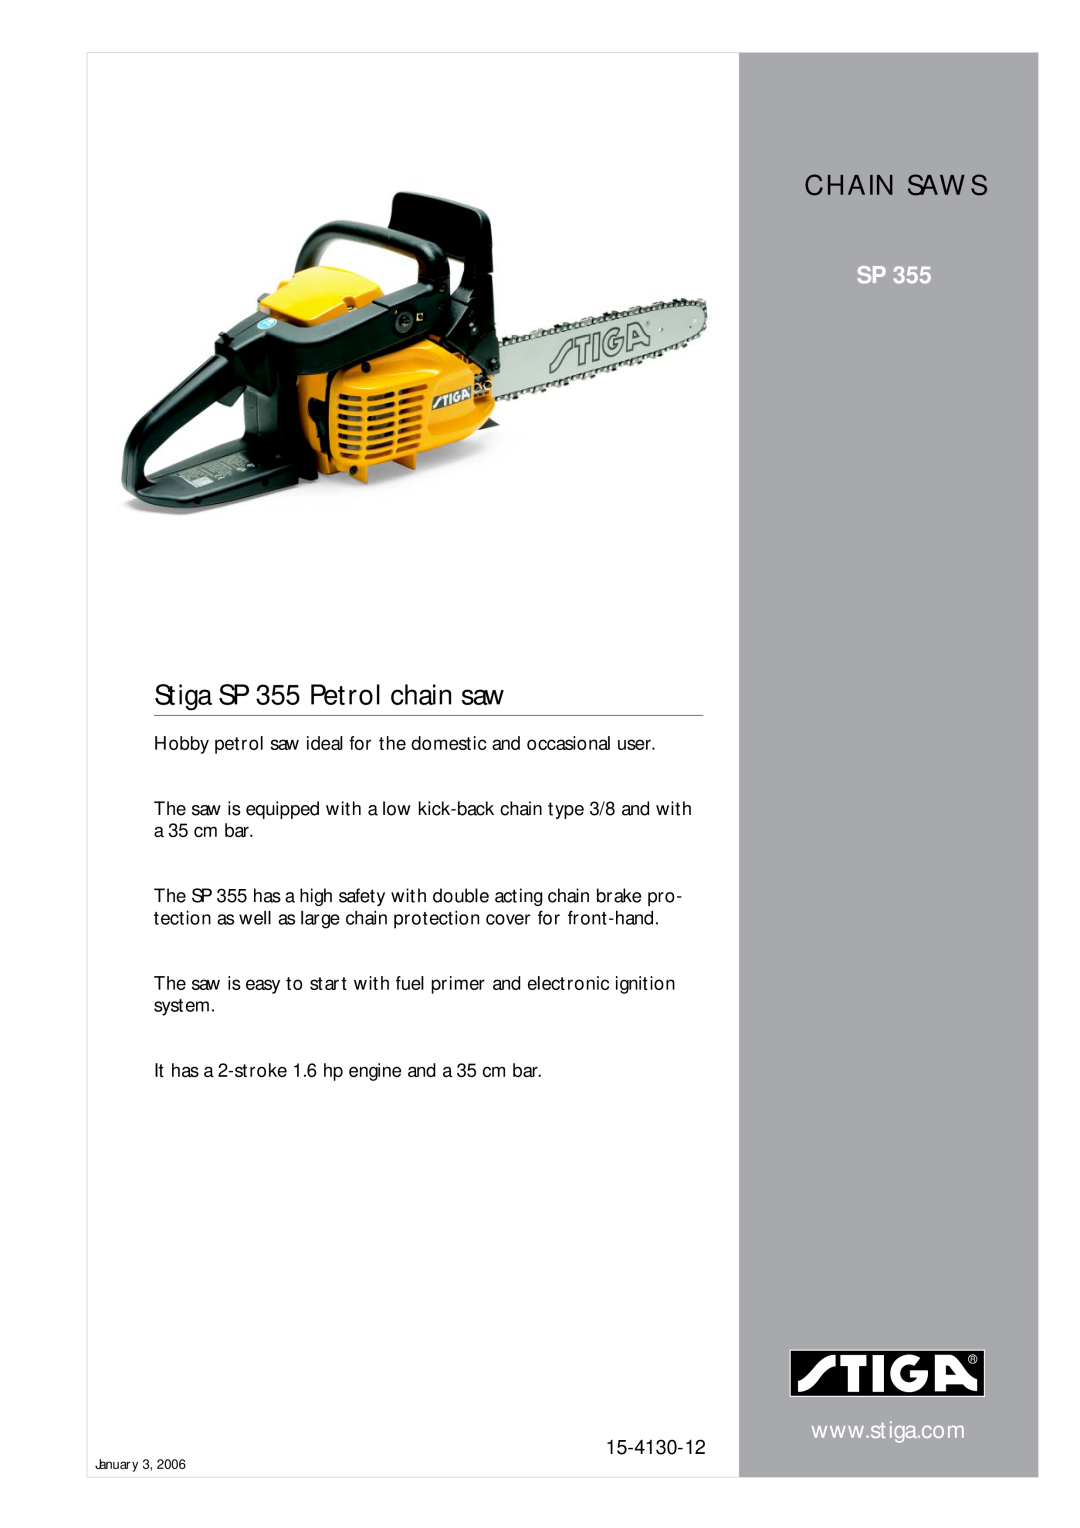 Stiga manual Chain Saws, Stiga SP 355 Petrol chain saw, 15-4130-12 